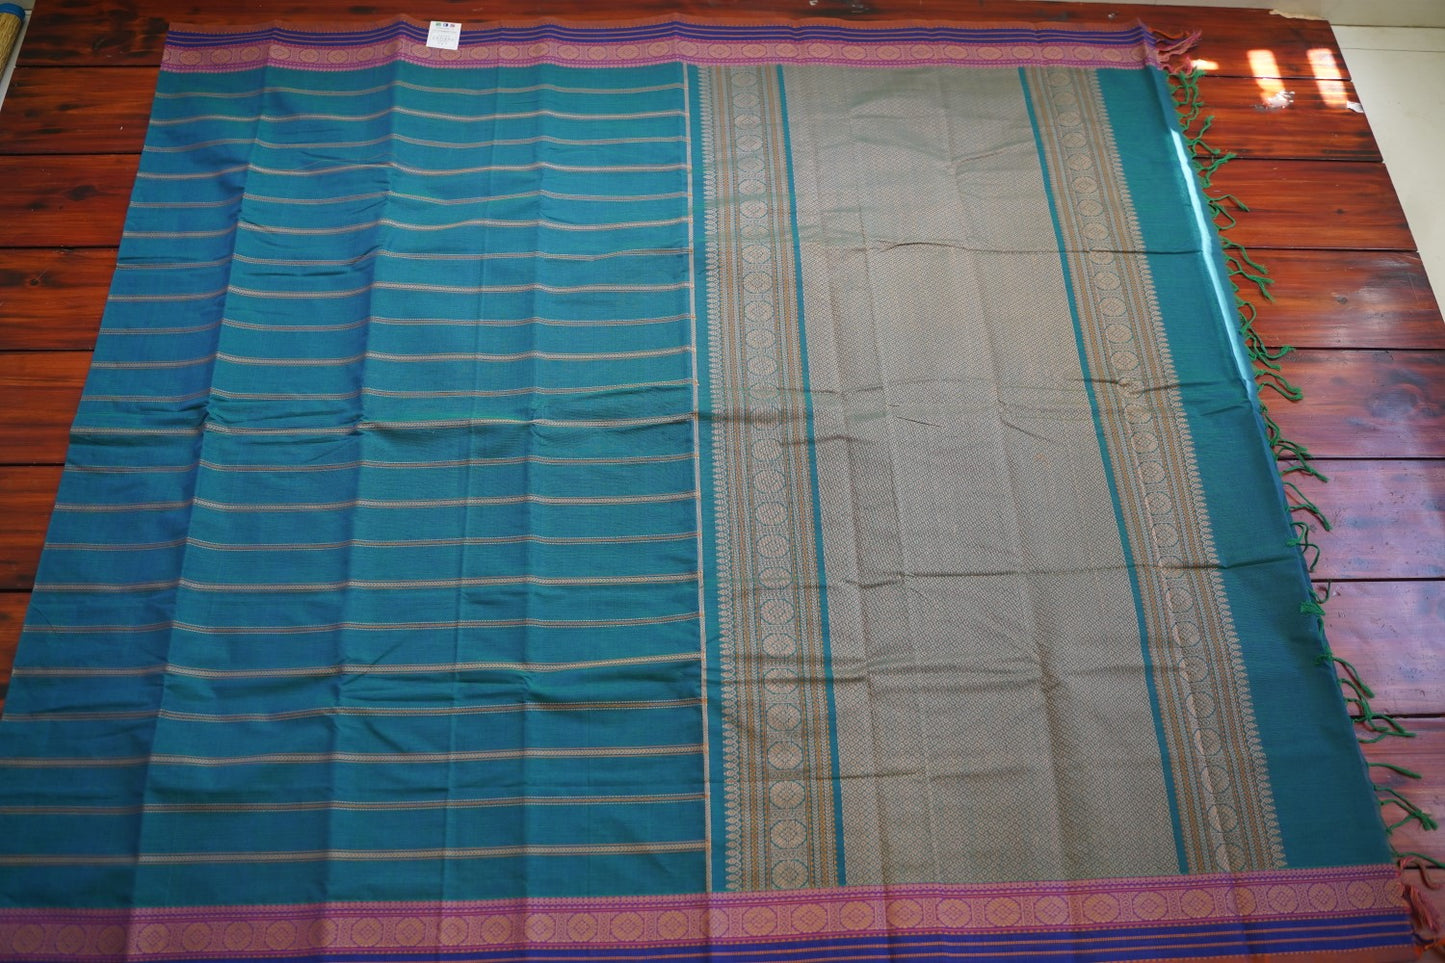 Peacock Blue Veldhari Kanchi handloom Cotton saree with Thread border PC11289